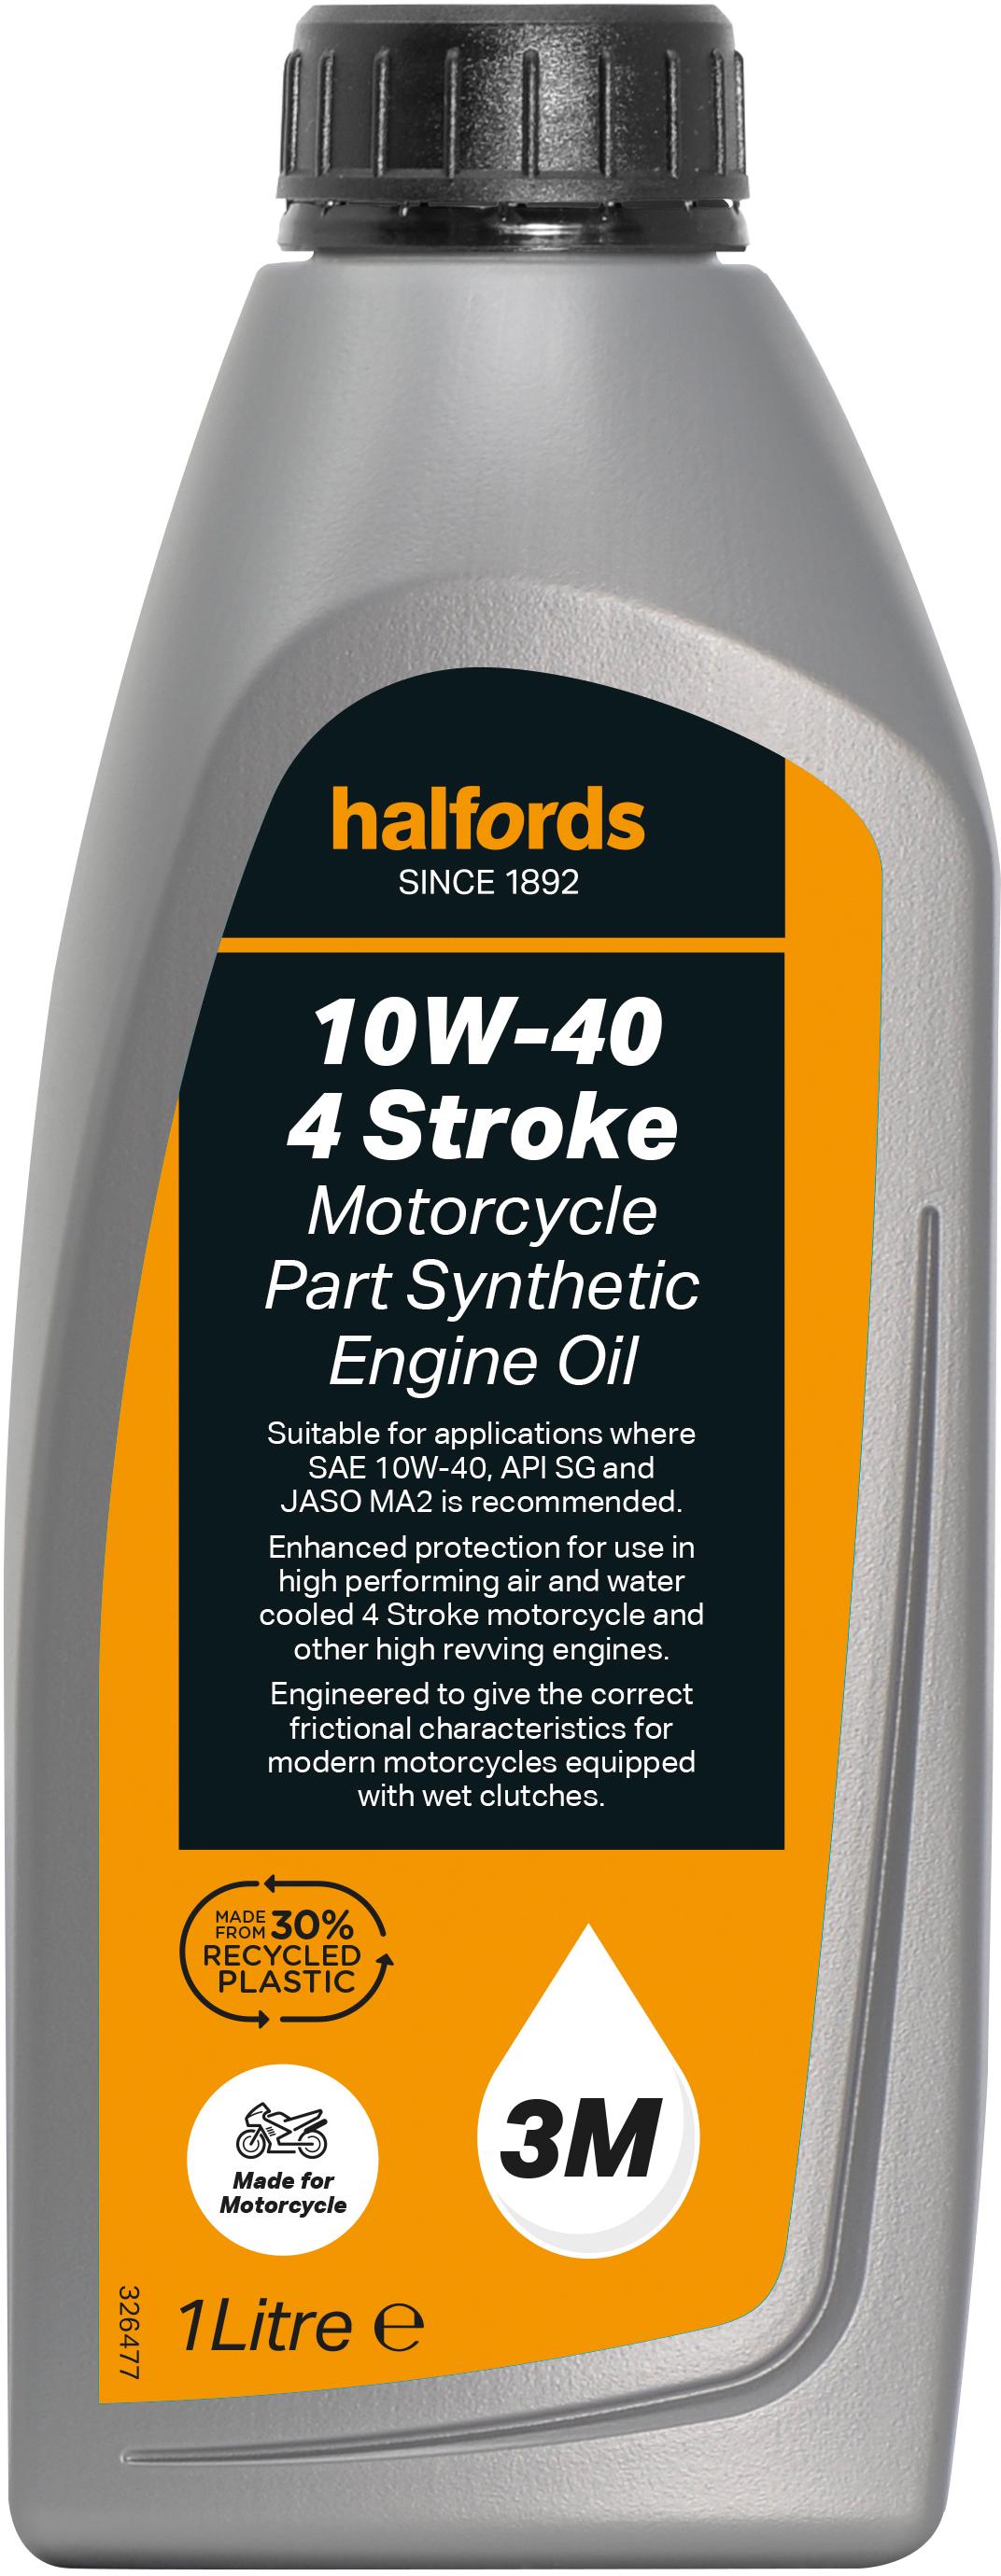 Halfords Bike Oil 10W-40 Part Syn Motorcycle Oil 1L